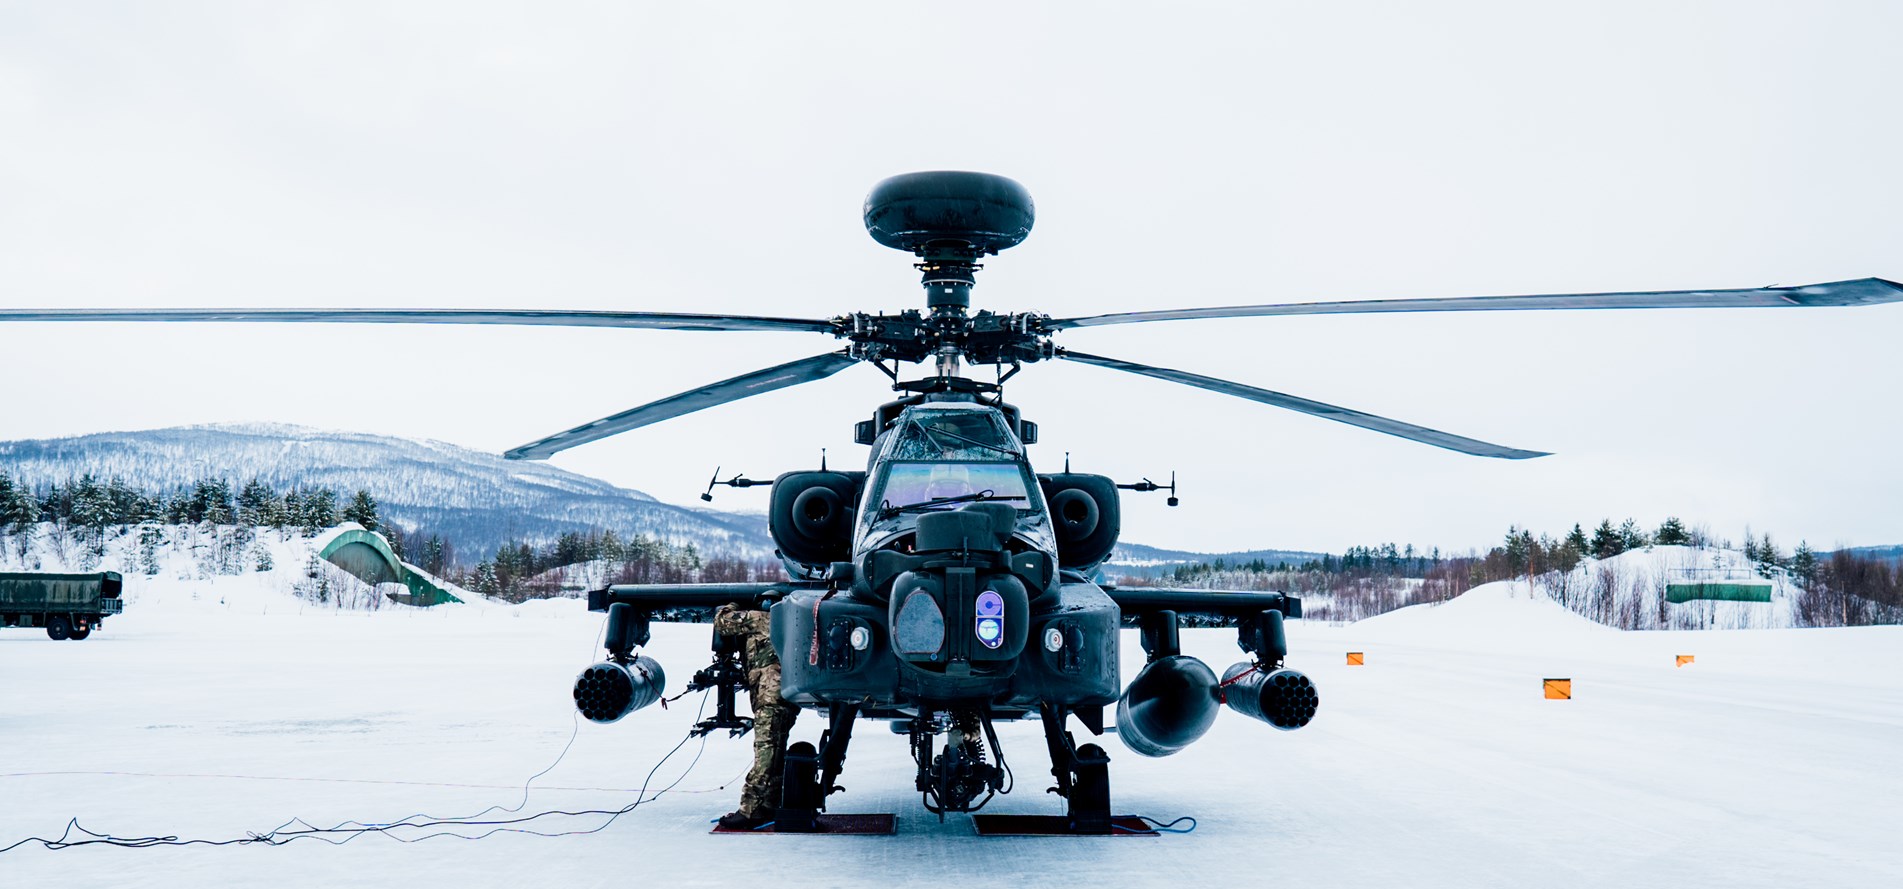 British Army AgustaWestland Apache Attack Helicopter